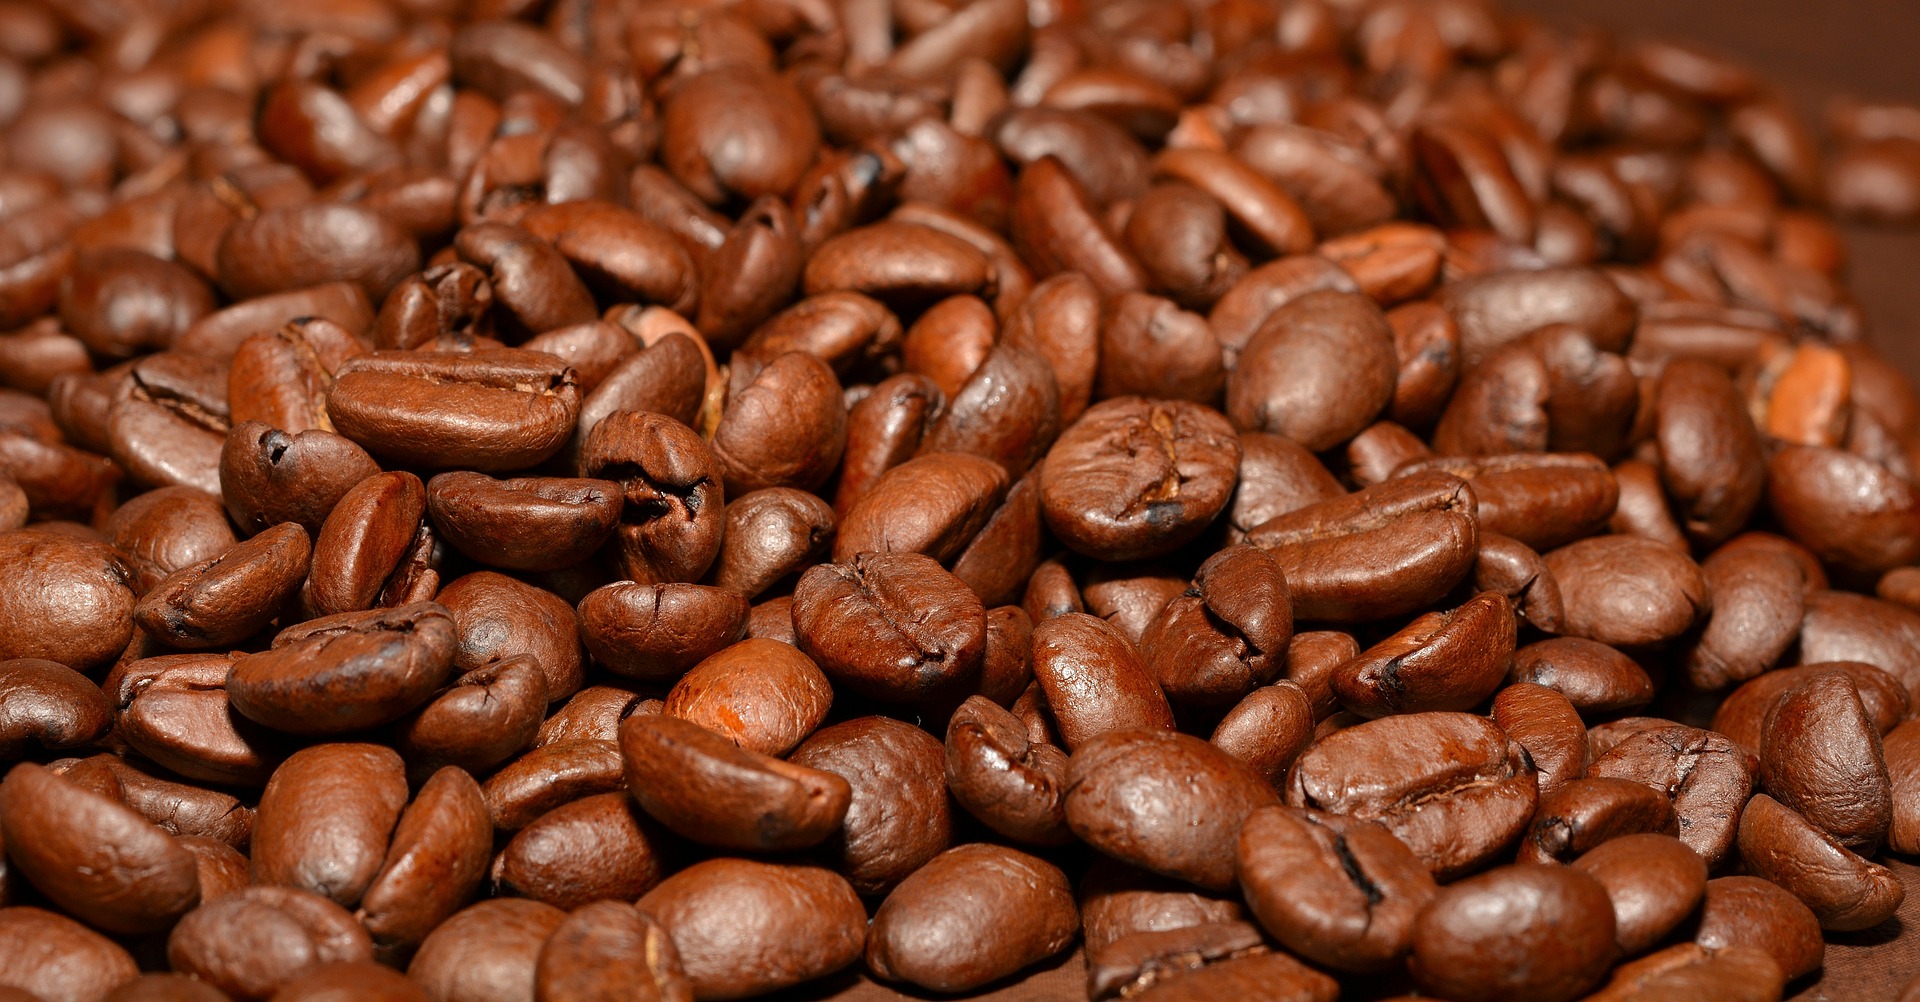 coffee-beans-618858_1920